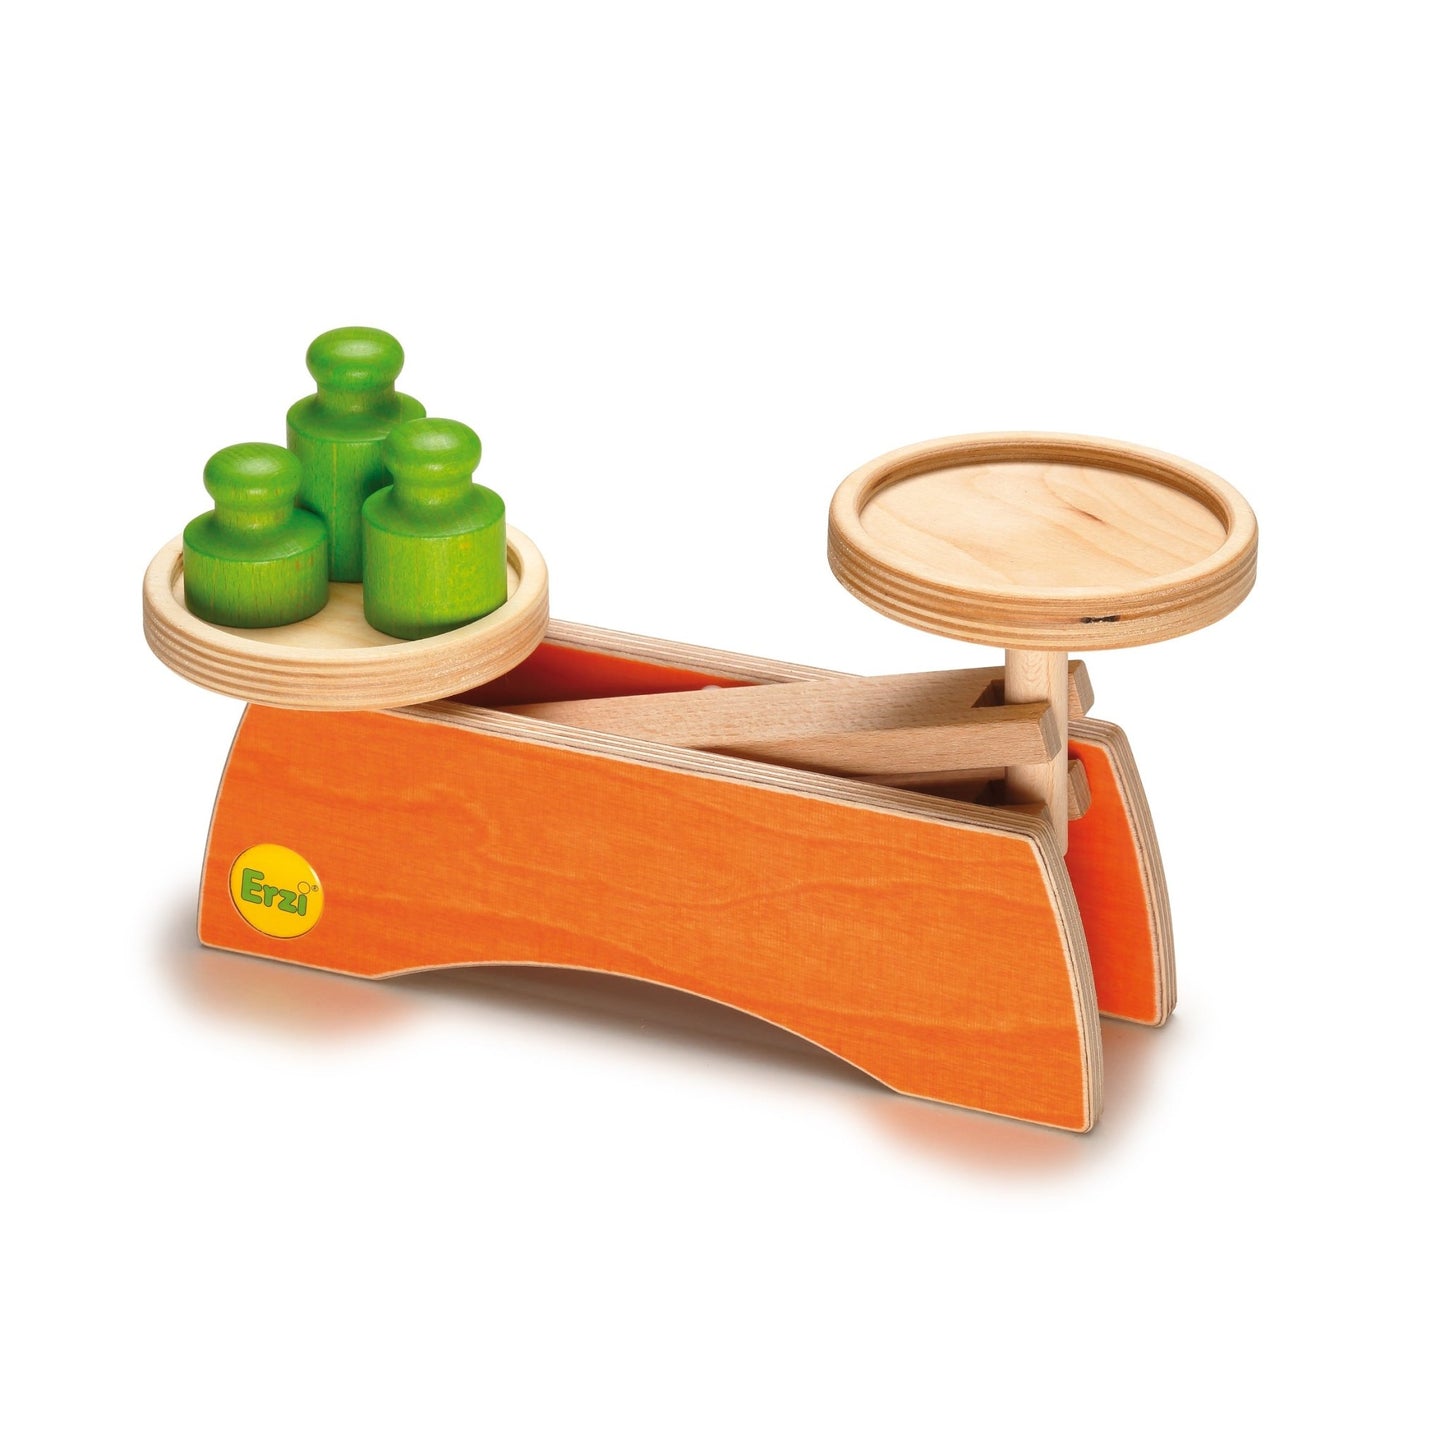 erzi wooden educational toy scale